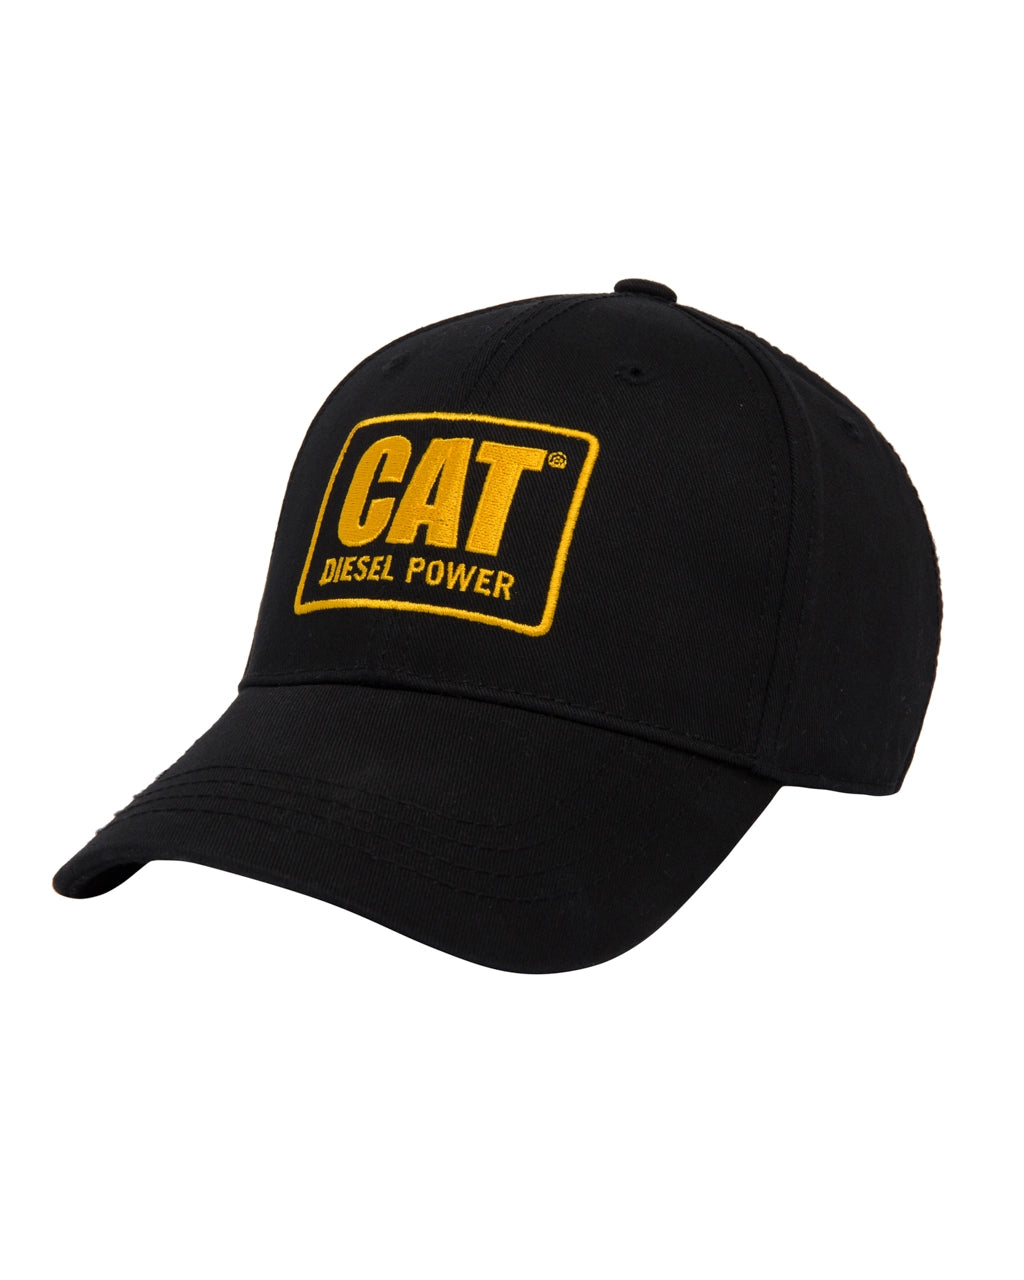 Caterpillar Workwear Official Website - Work Clothes & Apparel from Cat®